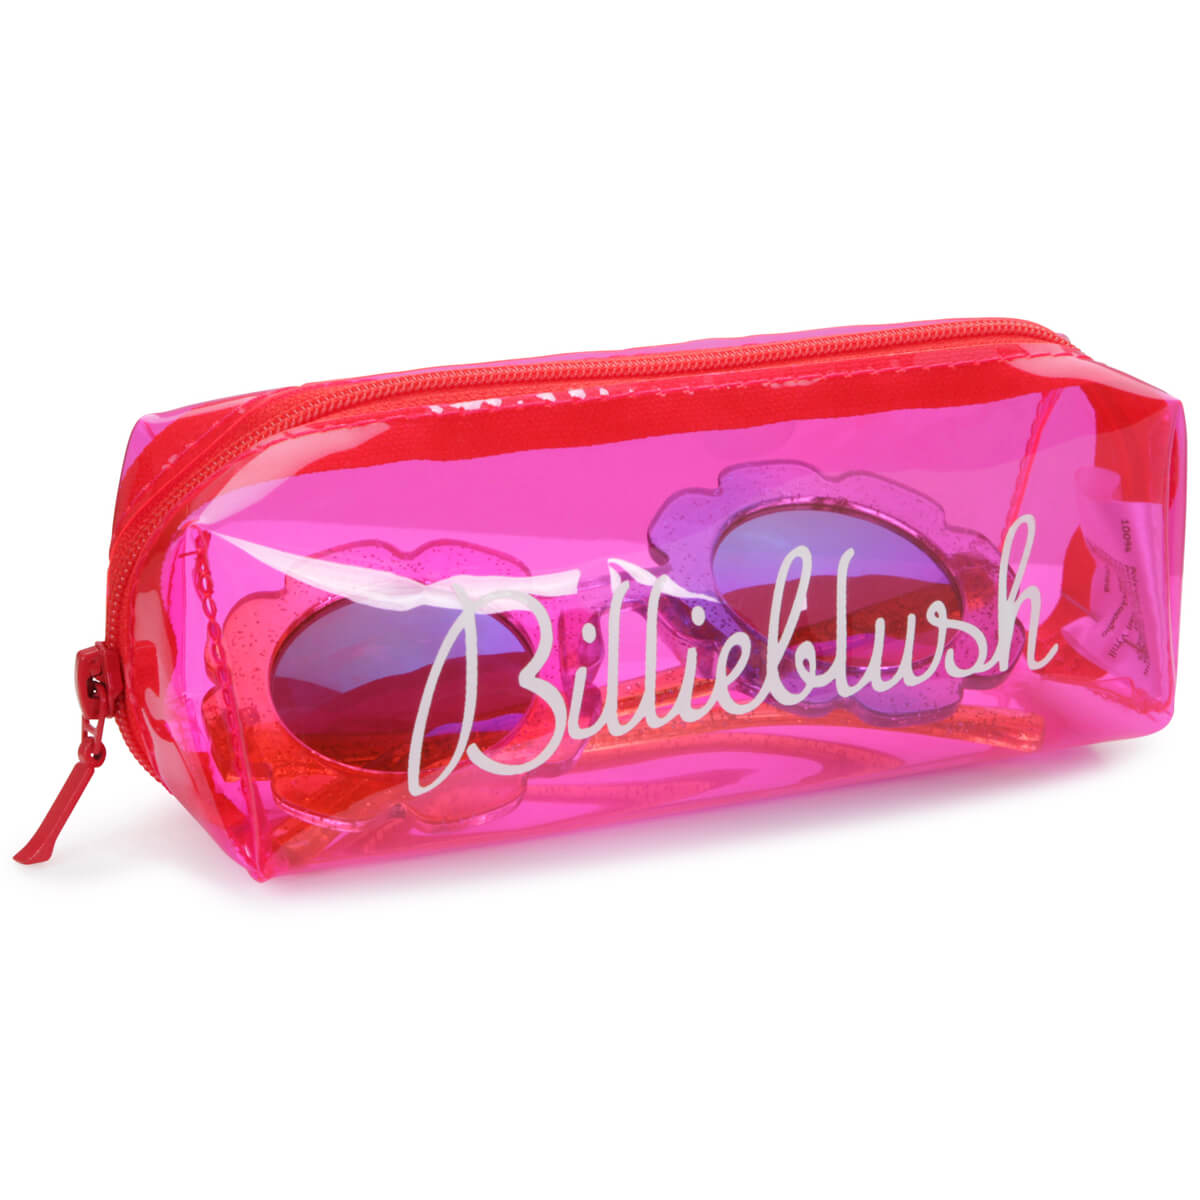 Billieblush Girls Multi Sunglasses